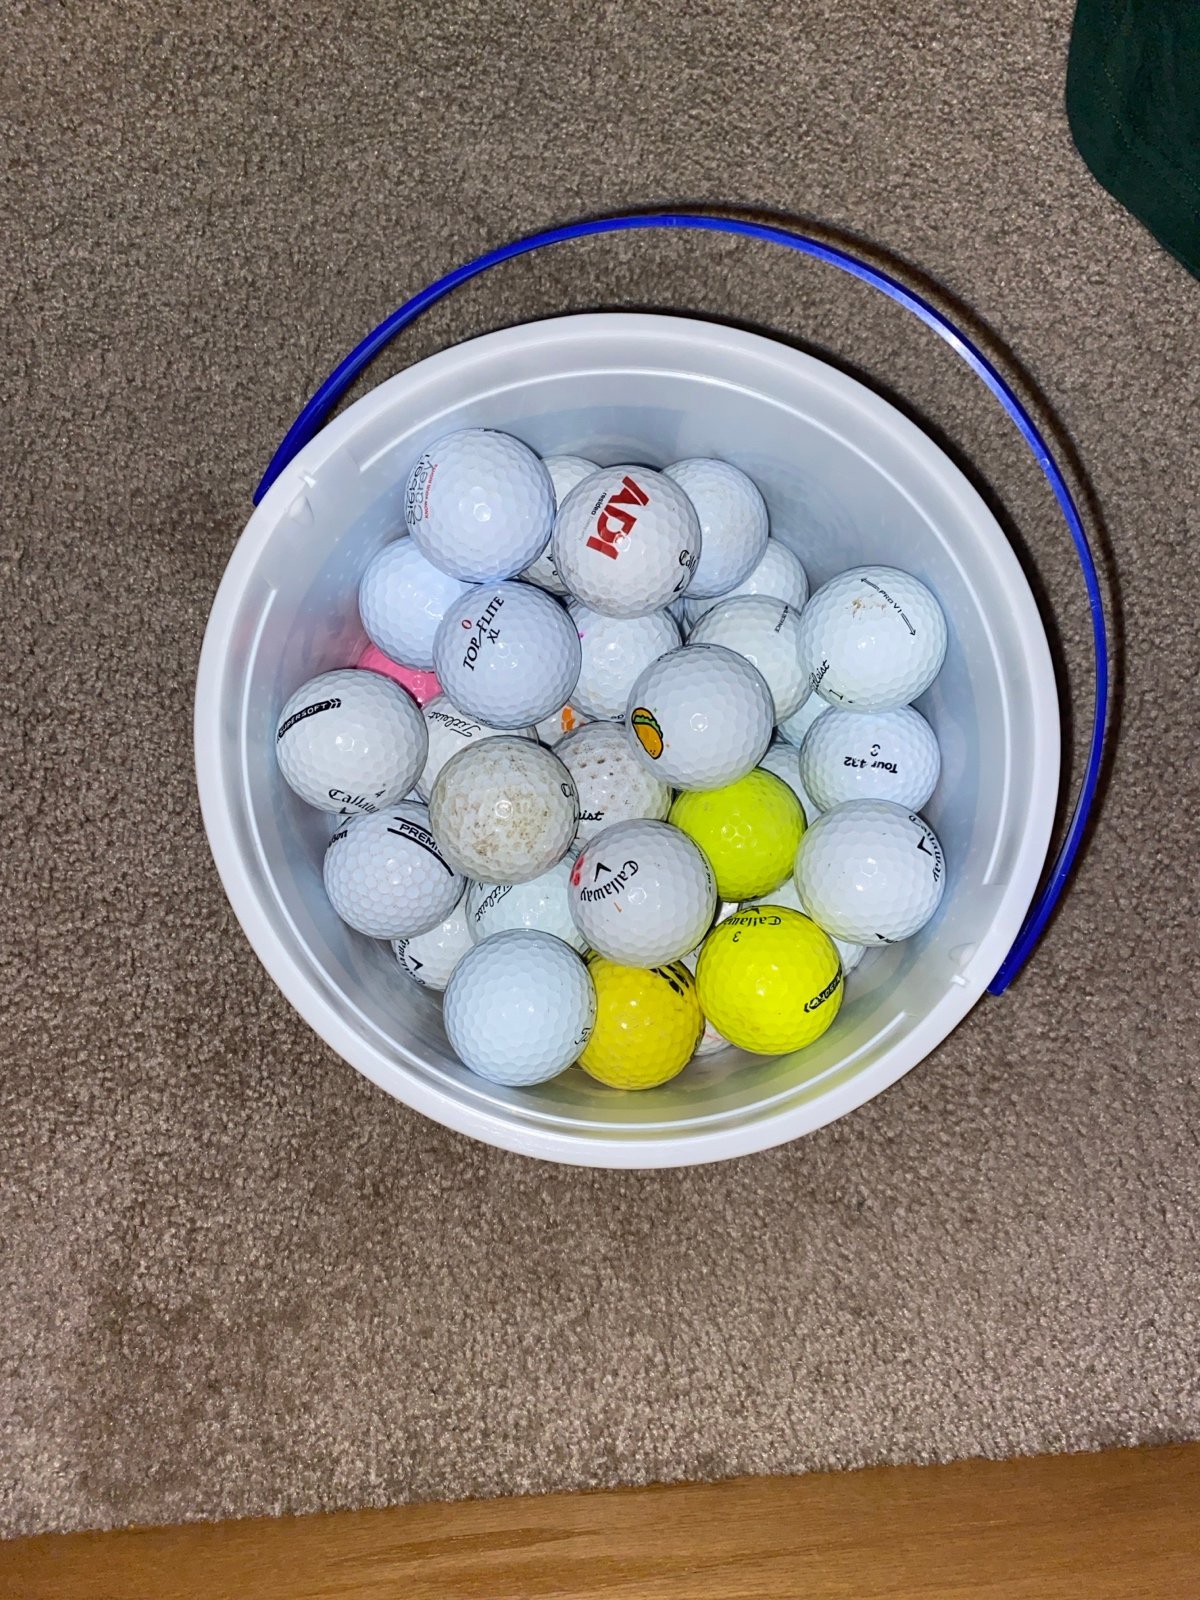 33 golf balls JLwUjGPAK